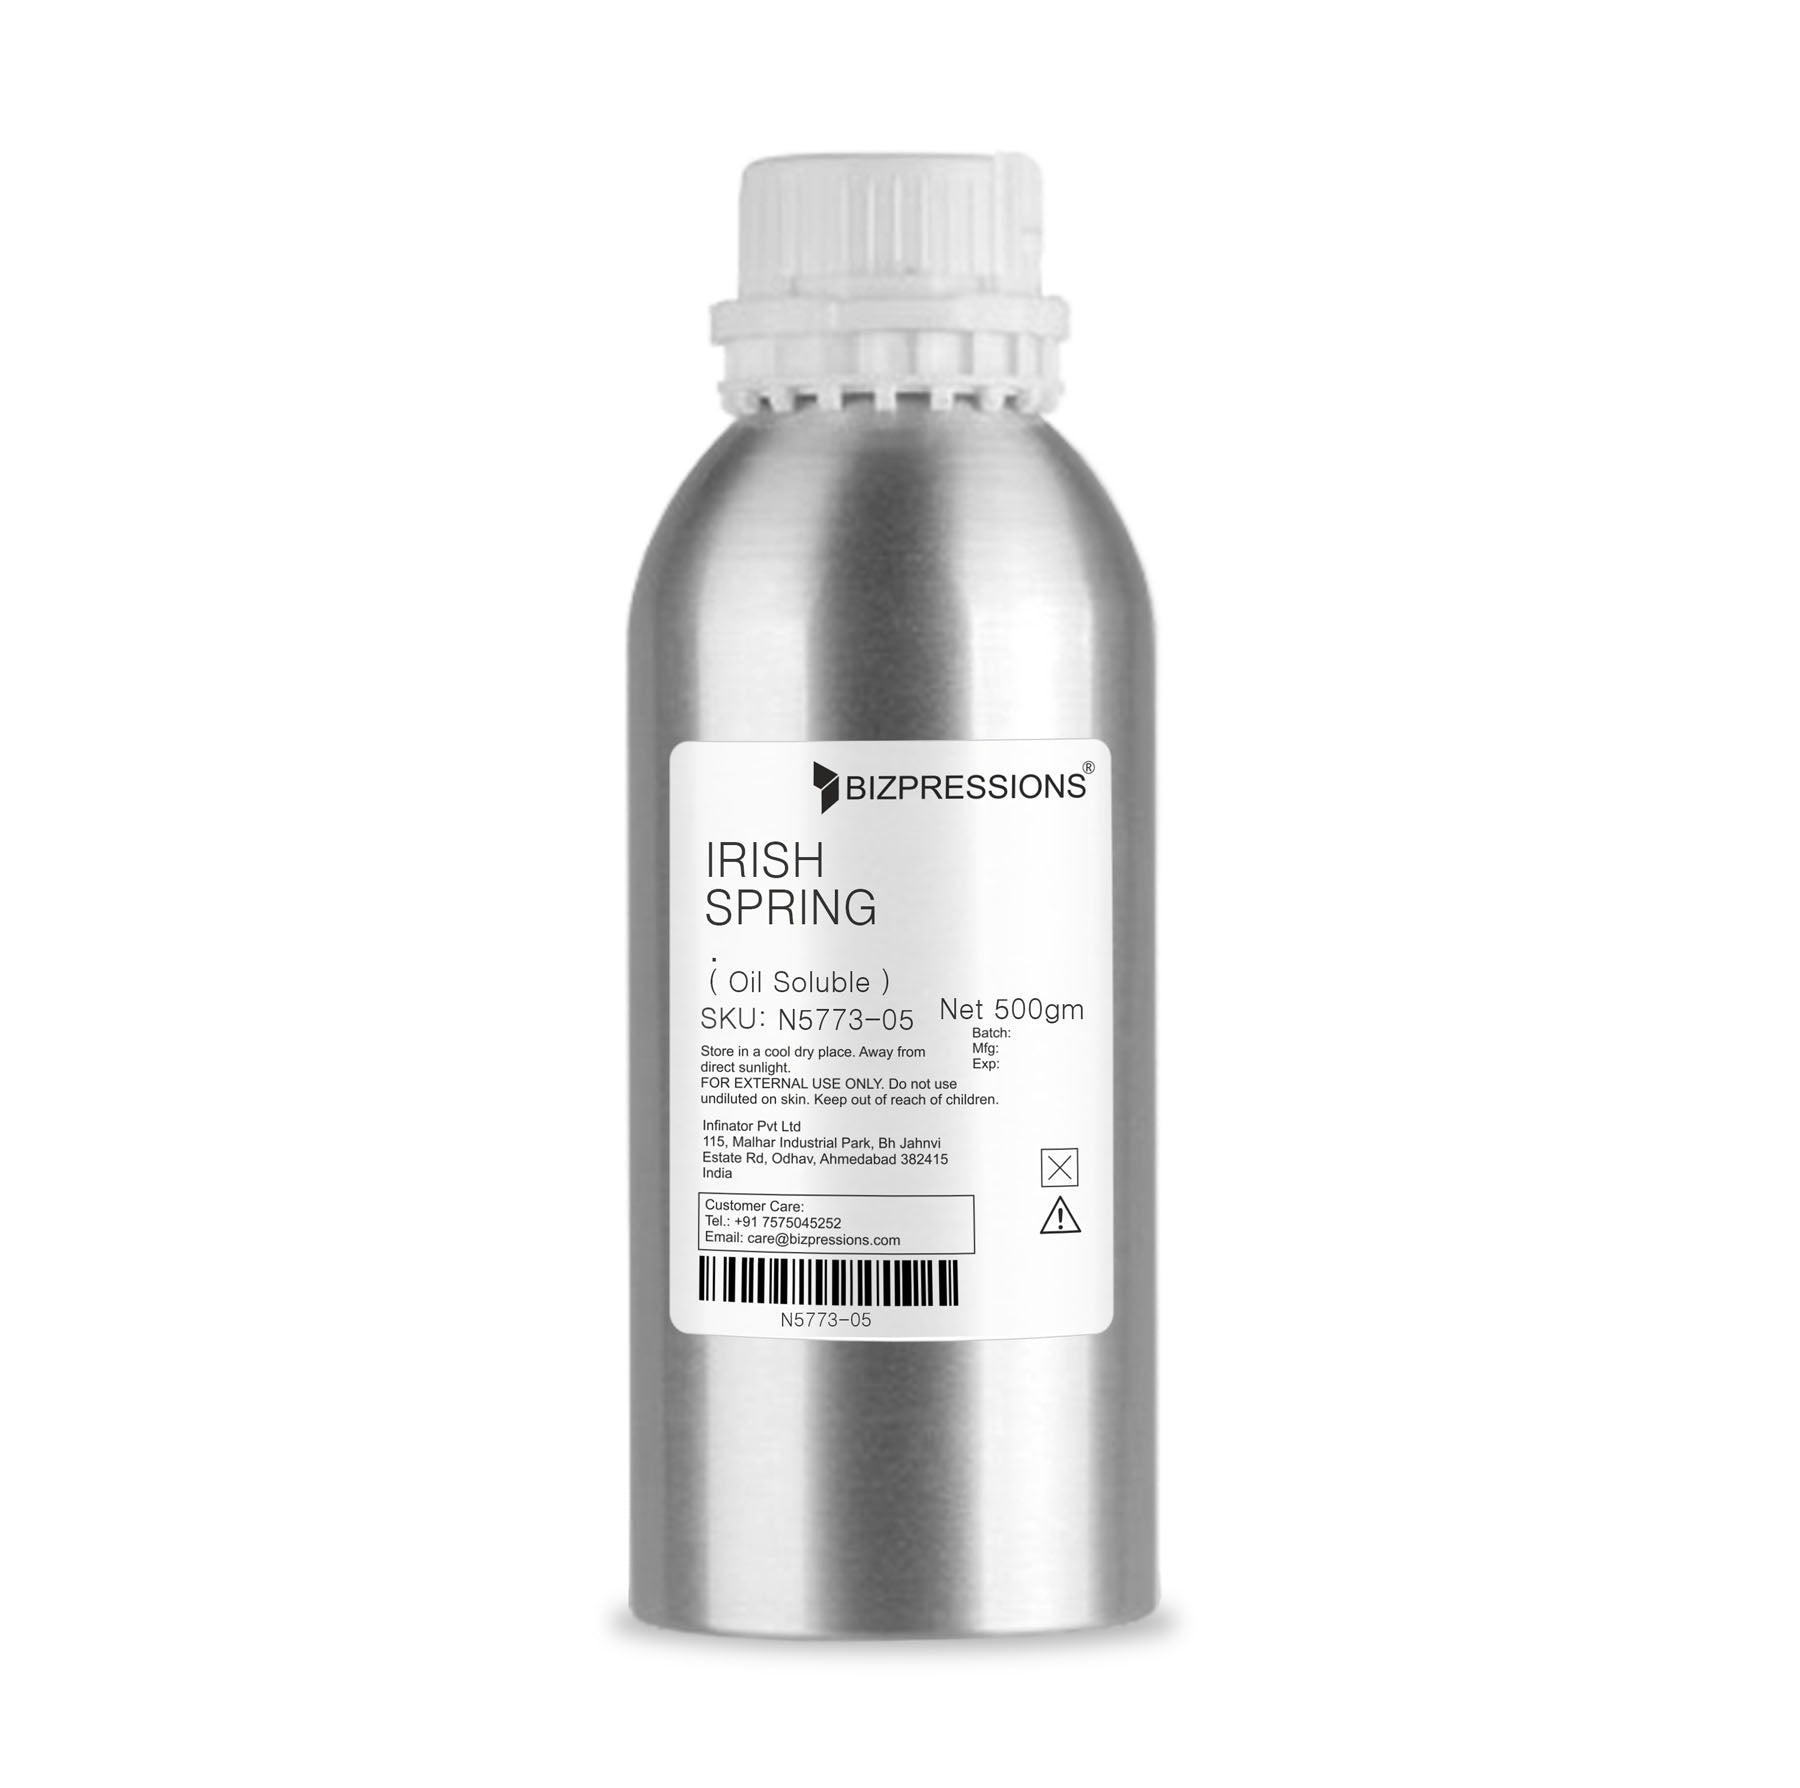 IRISH SPRING - Fragrance ( Oil Soluble ) - 500 gm